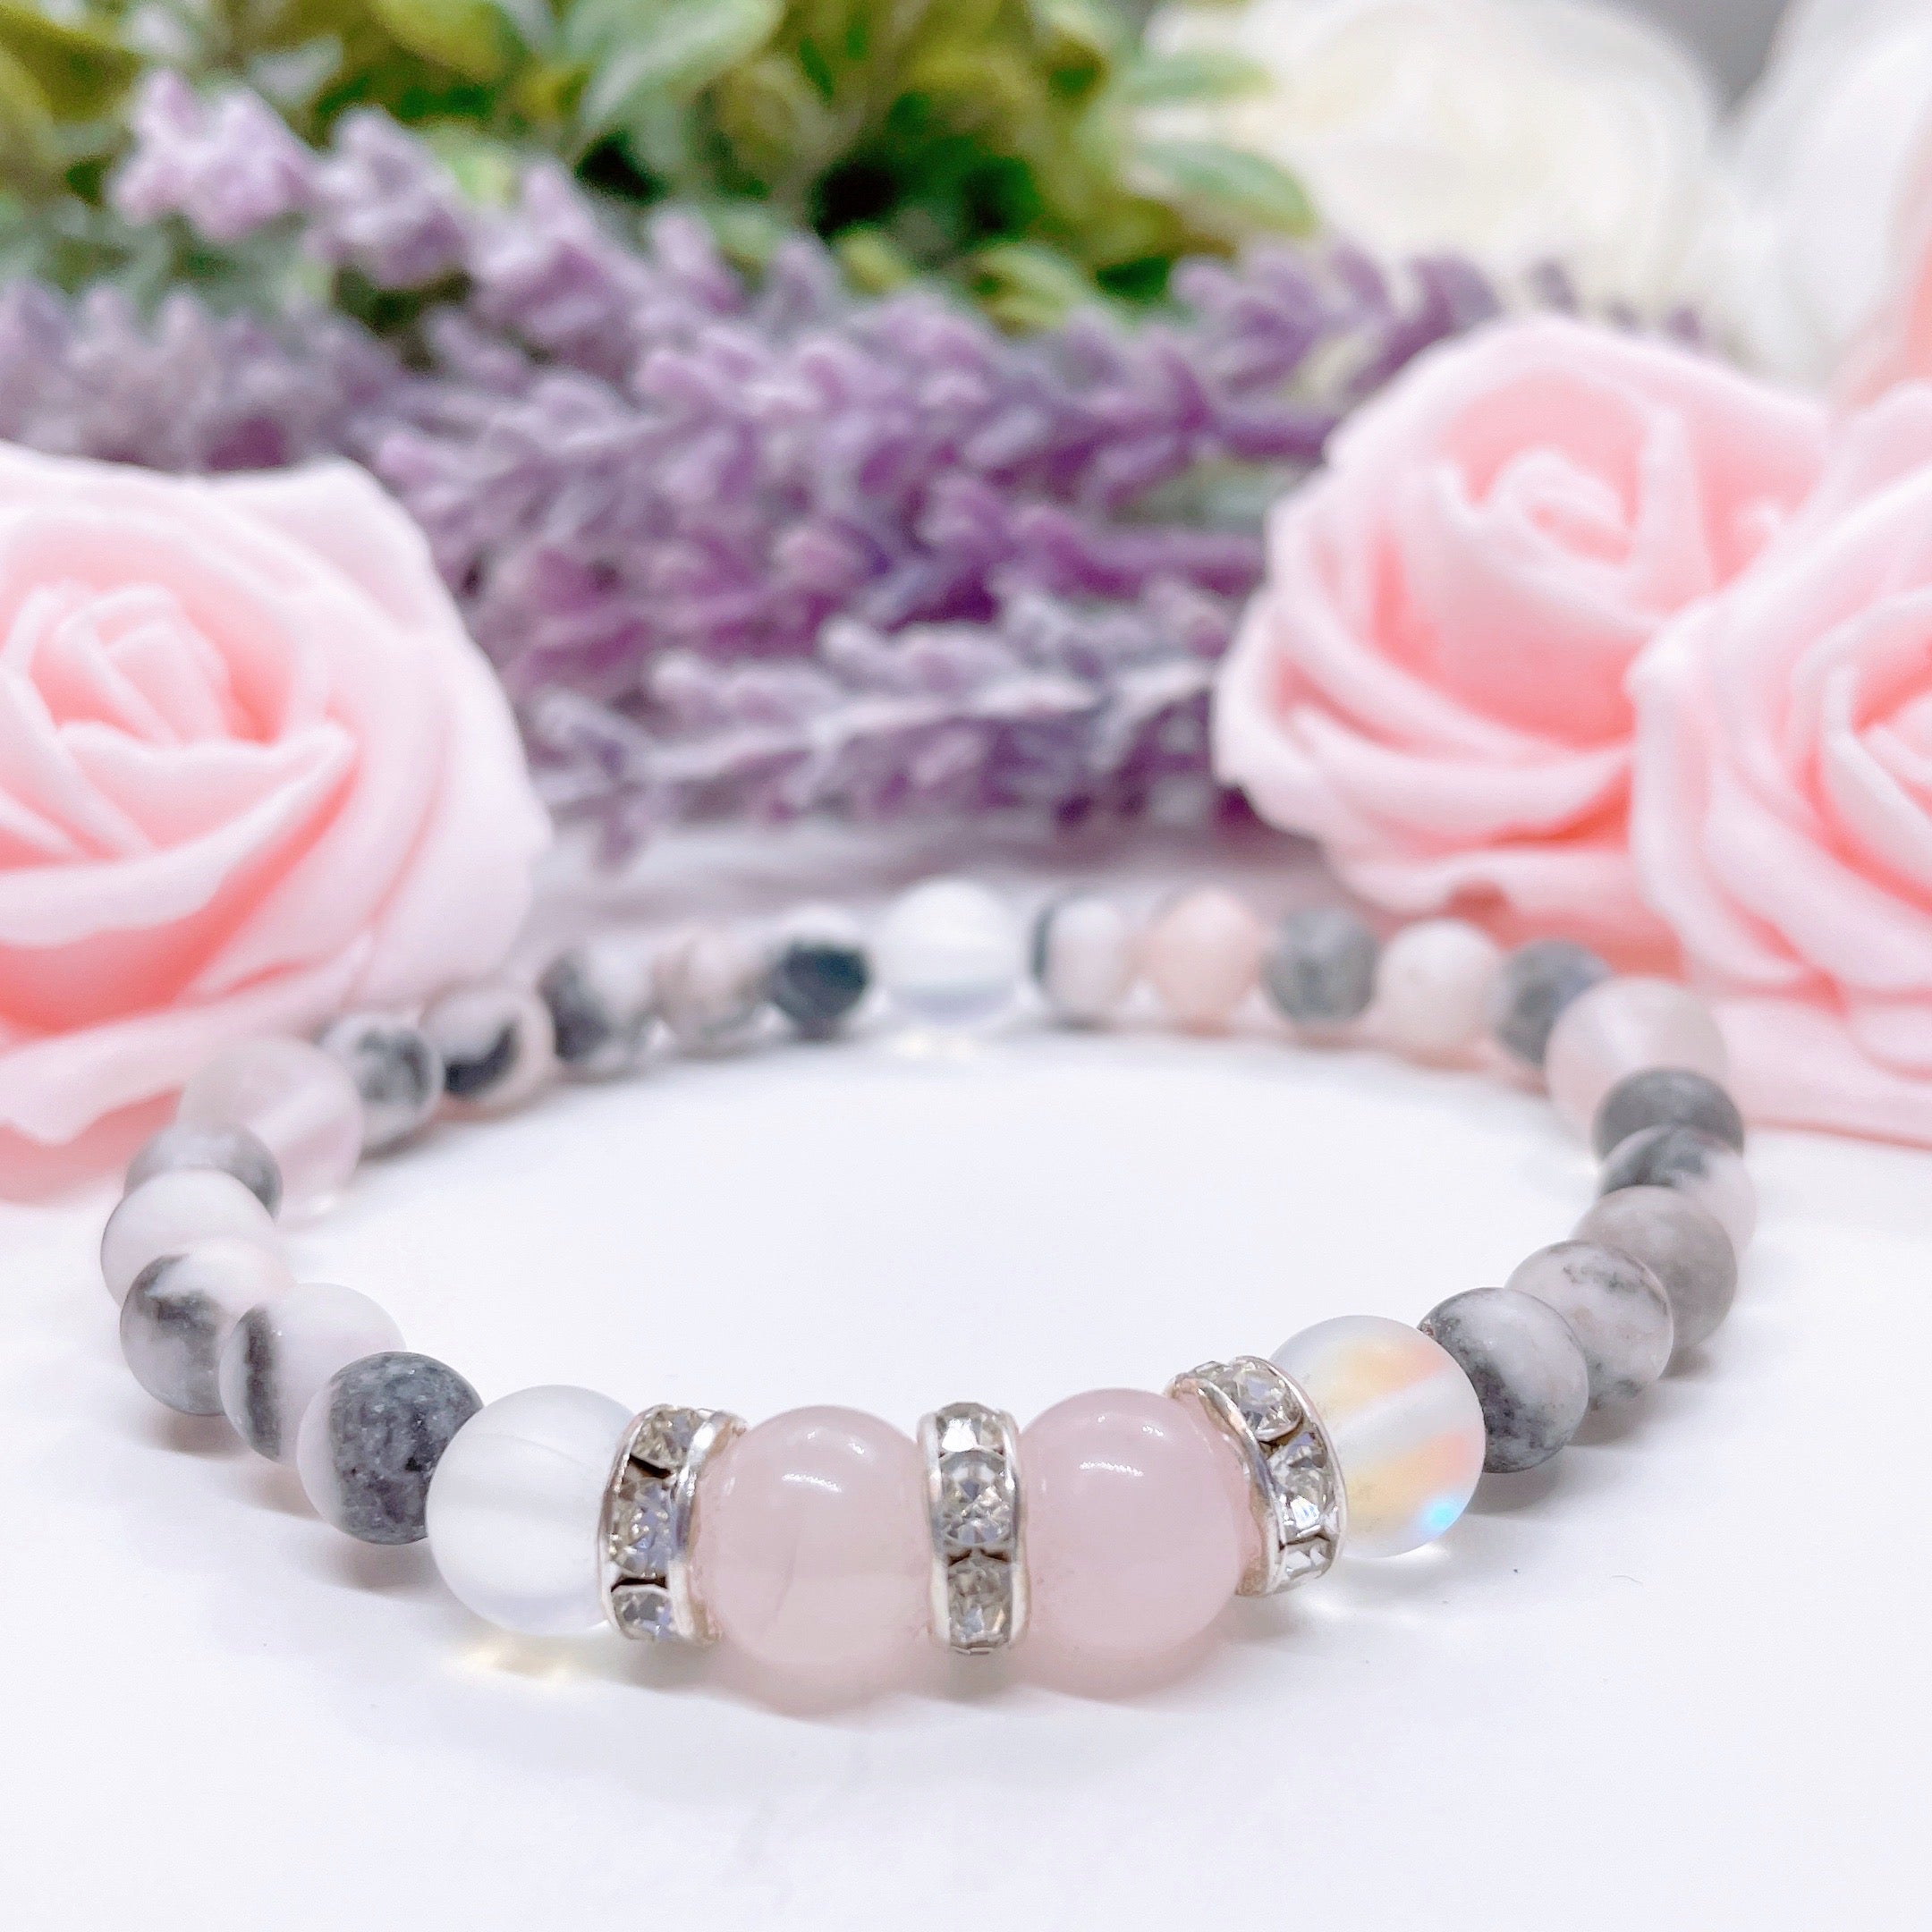 A Rose Quartz Rhinestone Companion Gemstone stretch bracelet made with 2  pink rose quartz gemstones, translucent aura beads, pink jasper gemstones, and rhinestone accents for added sparkle sits on a white table. 